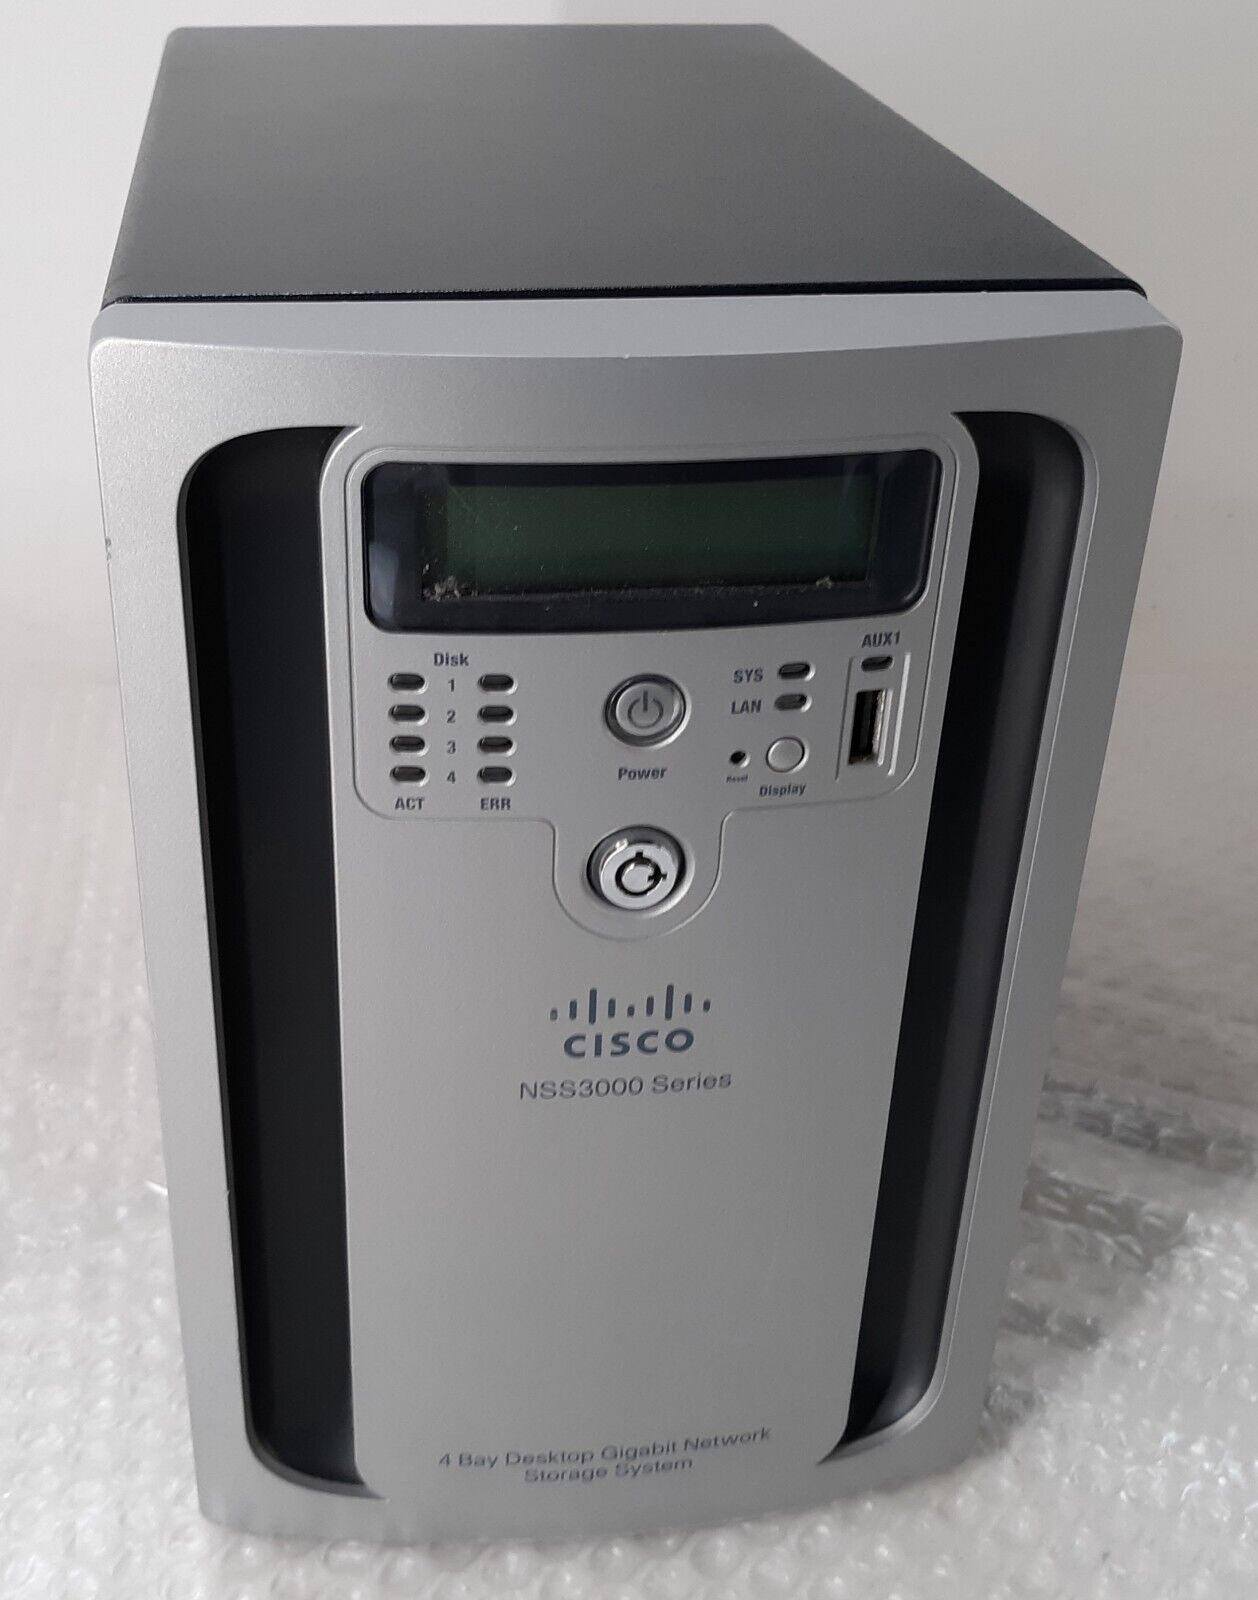 Genuine Cisco NSS3000 Series NSS3000 V01 4-Bay Desktop Gigabit Network Storage